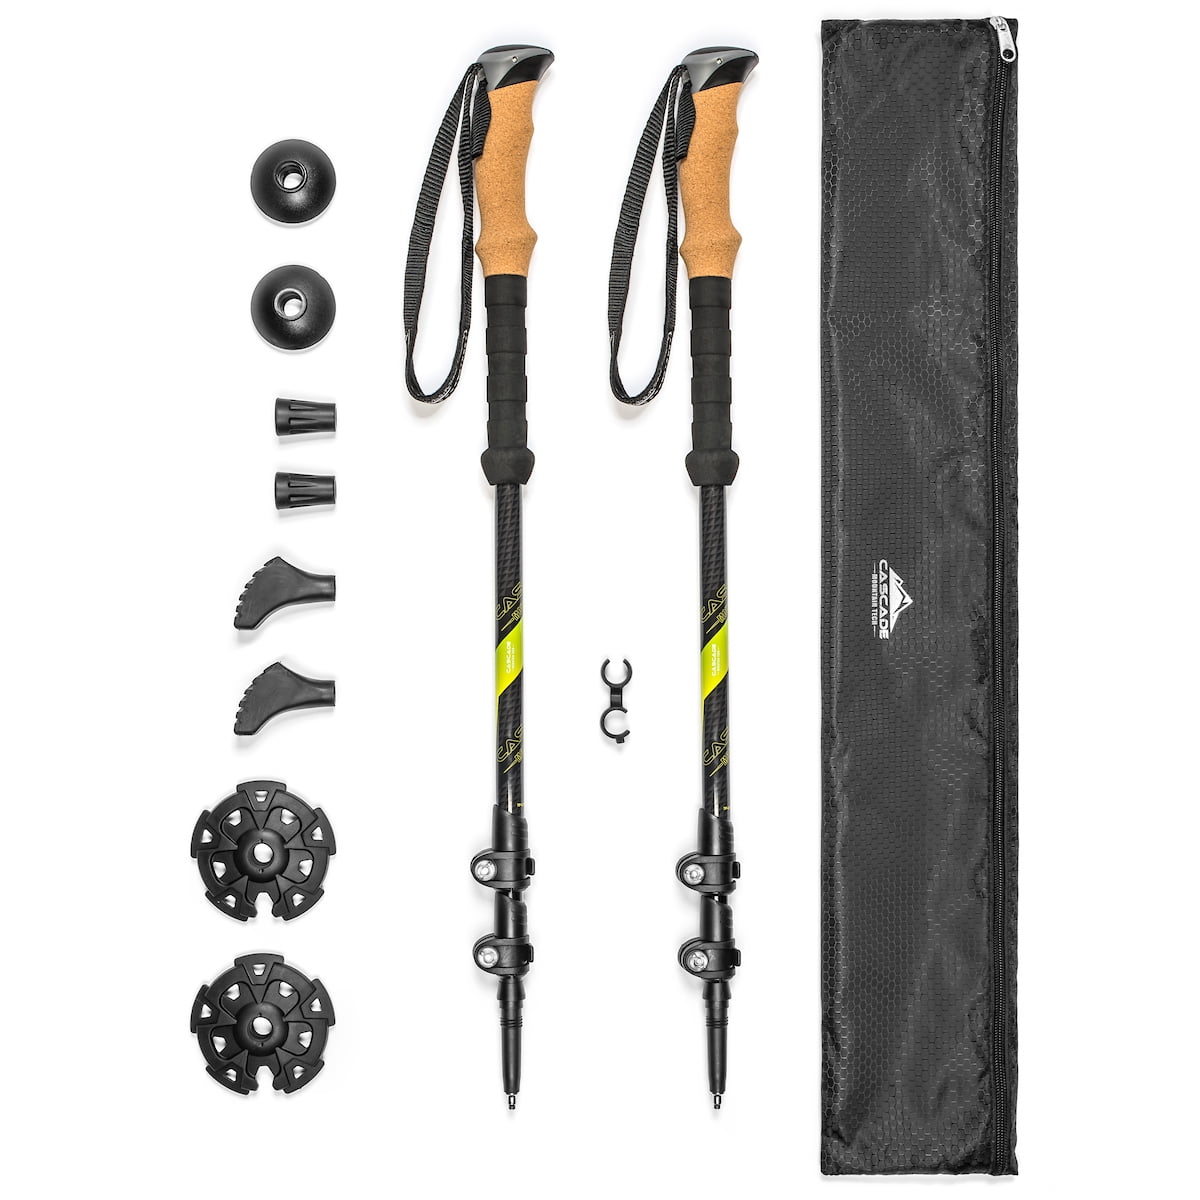 Quick Lock Adjustment All Terrain Accessories. Motion & Flow Premium Light Weight Trekking Poles/Collapsible Hiking Poles/for Women/Men/Hiking/Trekking with Sweat Absorbing Natural Cork Grips 